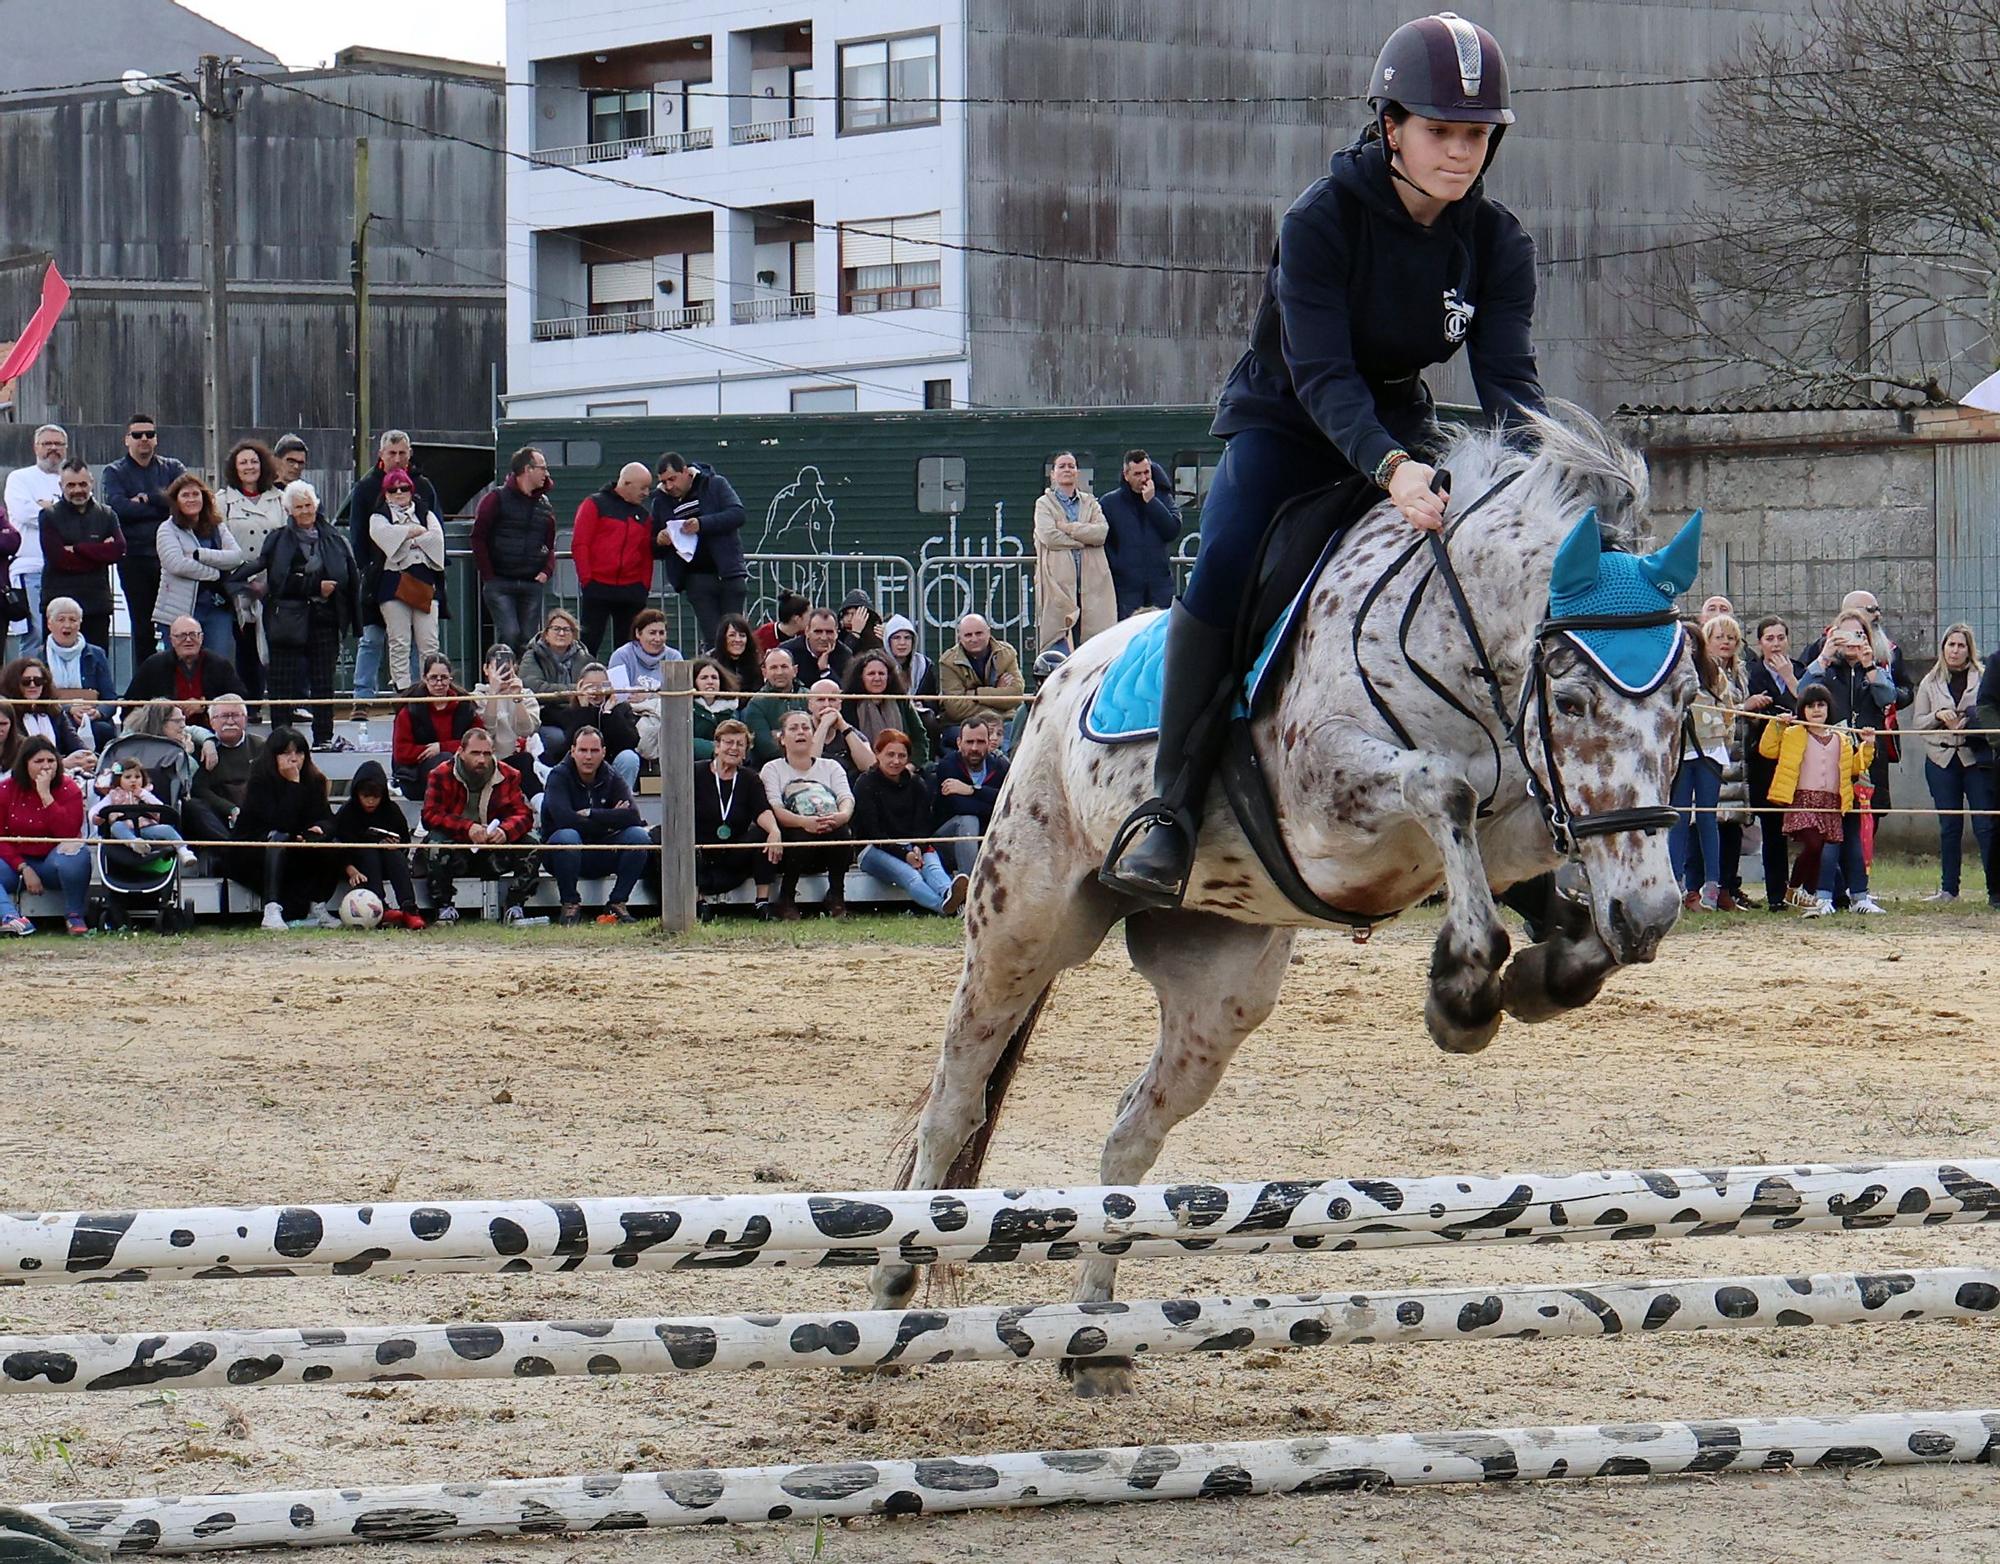 Tui. Concurso de saltos de caballo para niños durante la Feria Cabalar.